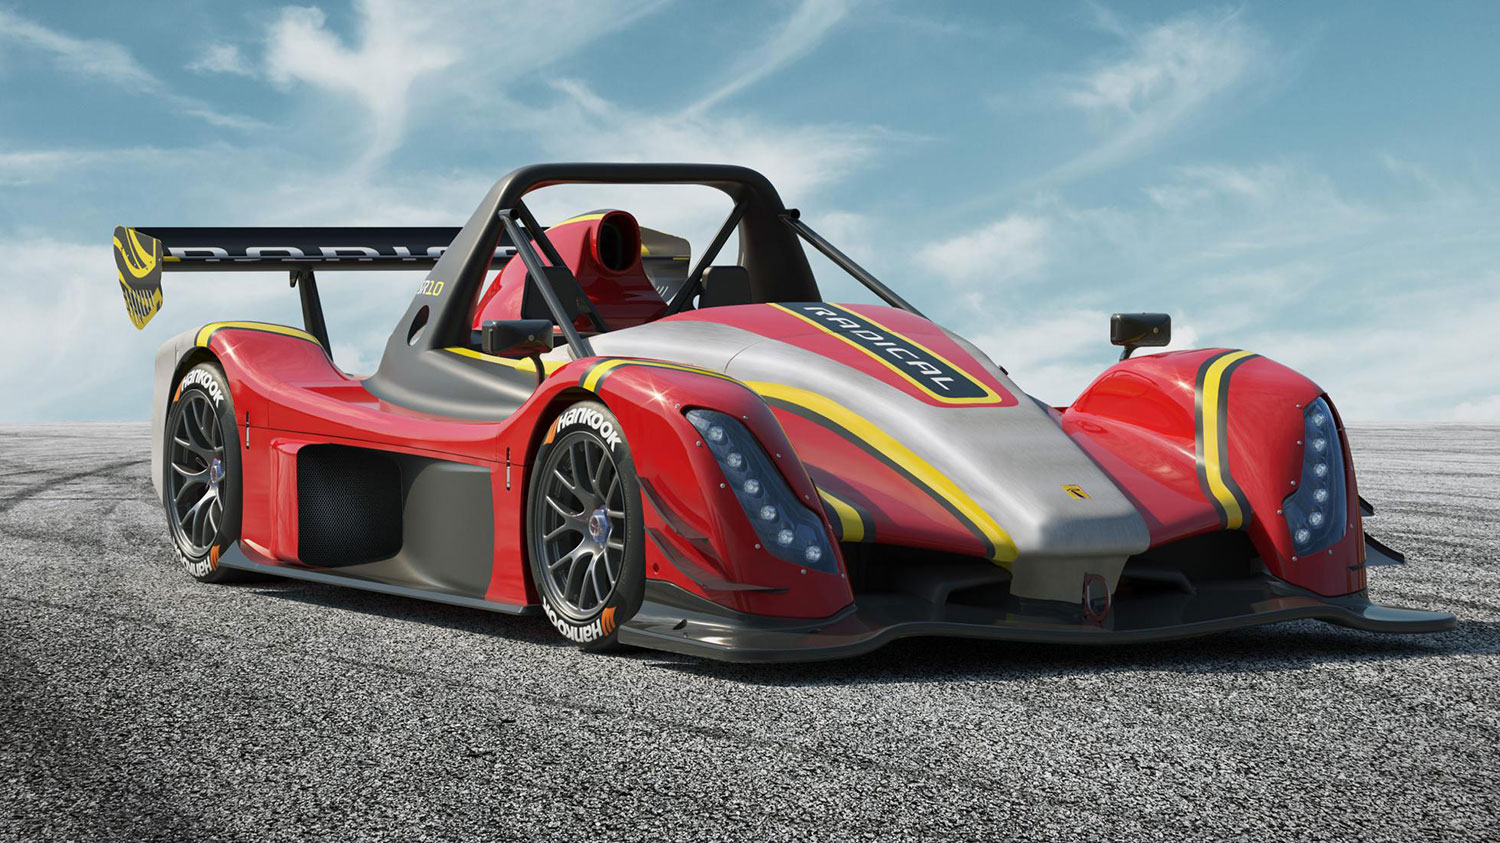 New Radical SR10, a lightweight racetrack cars with 425 horsepower.